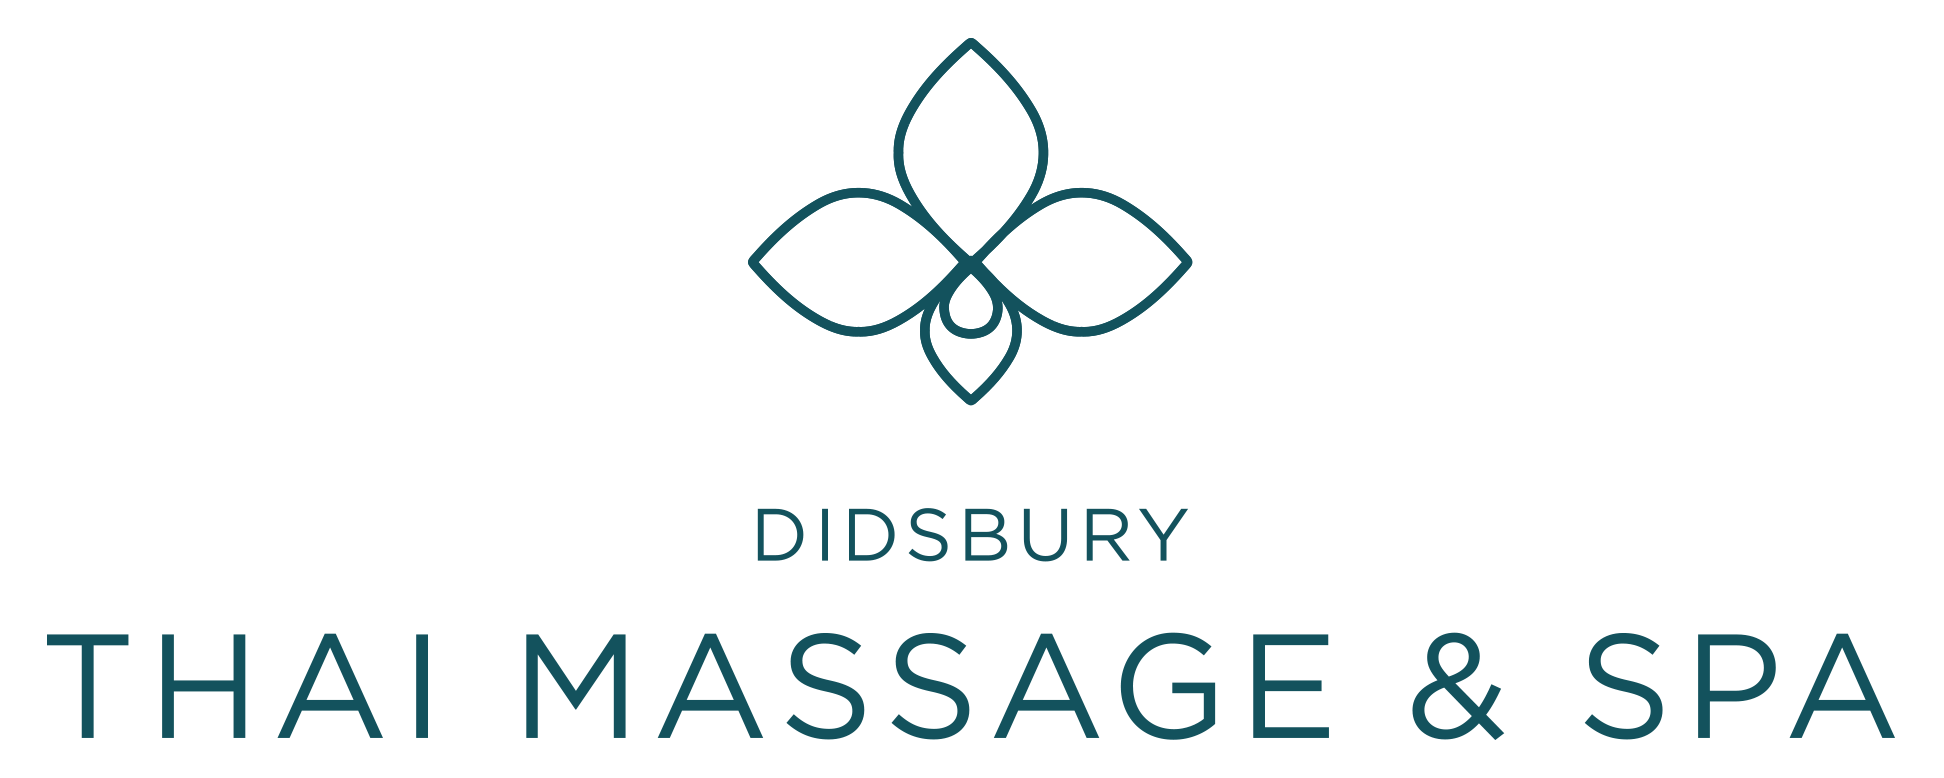 Contact — Didsbury Thai Massage & Spa